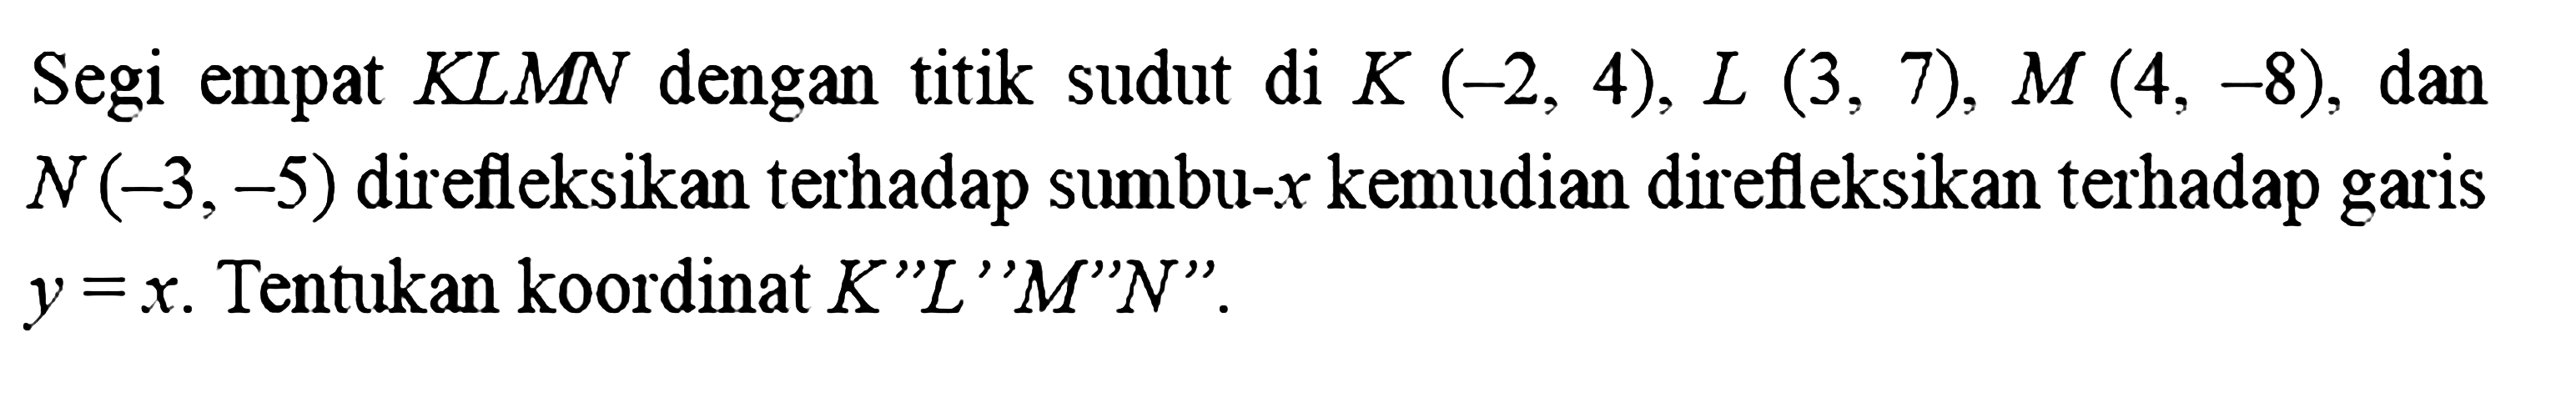 Segi empat KLMN dengan titik sudut di K(-2,4), L(3,7), M(4,-8), dan N(-3,-5) direfleksikan terhadap sumbu-x kemudian direfleksikan terhadap garis y=x. Tentukan koordinat K'L'M'N'